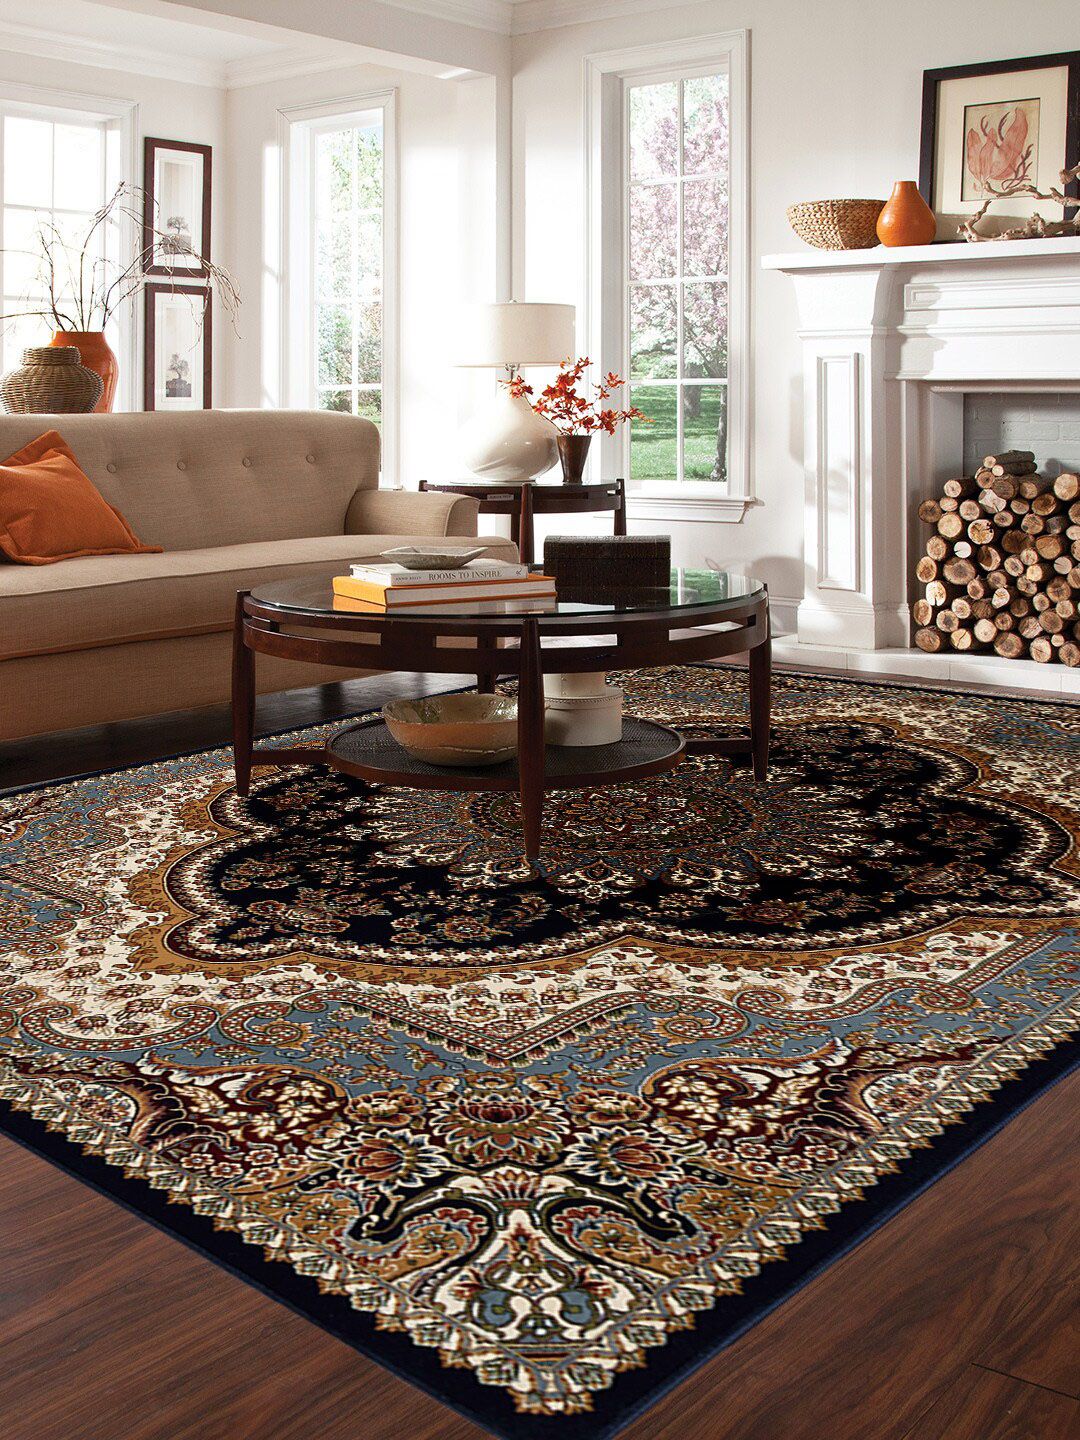 DDecor Multicolored Ethnic Motifs Traditional Carpet Price in India